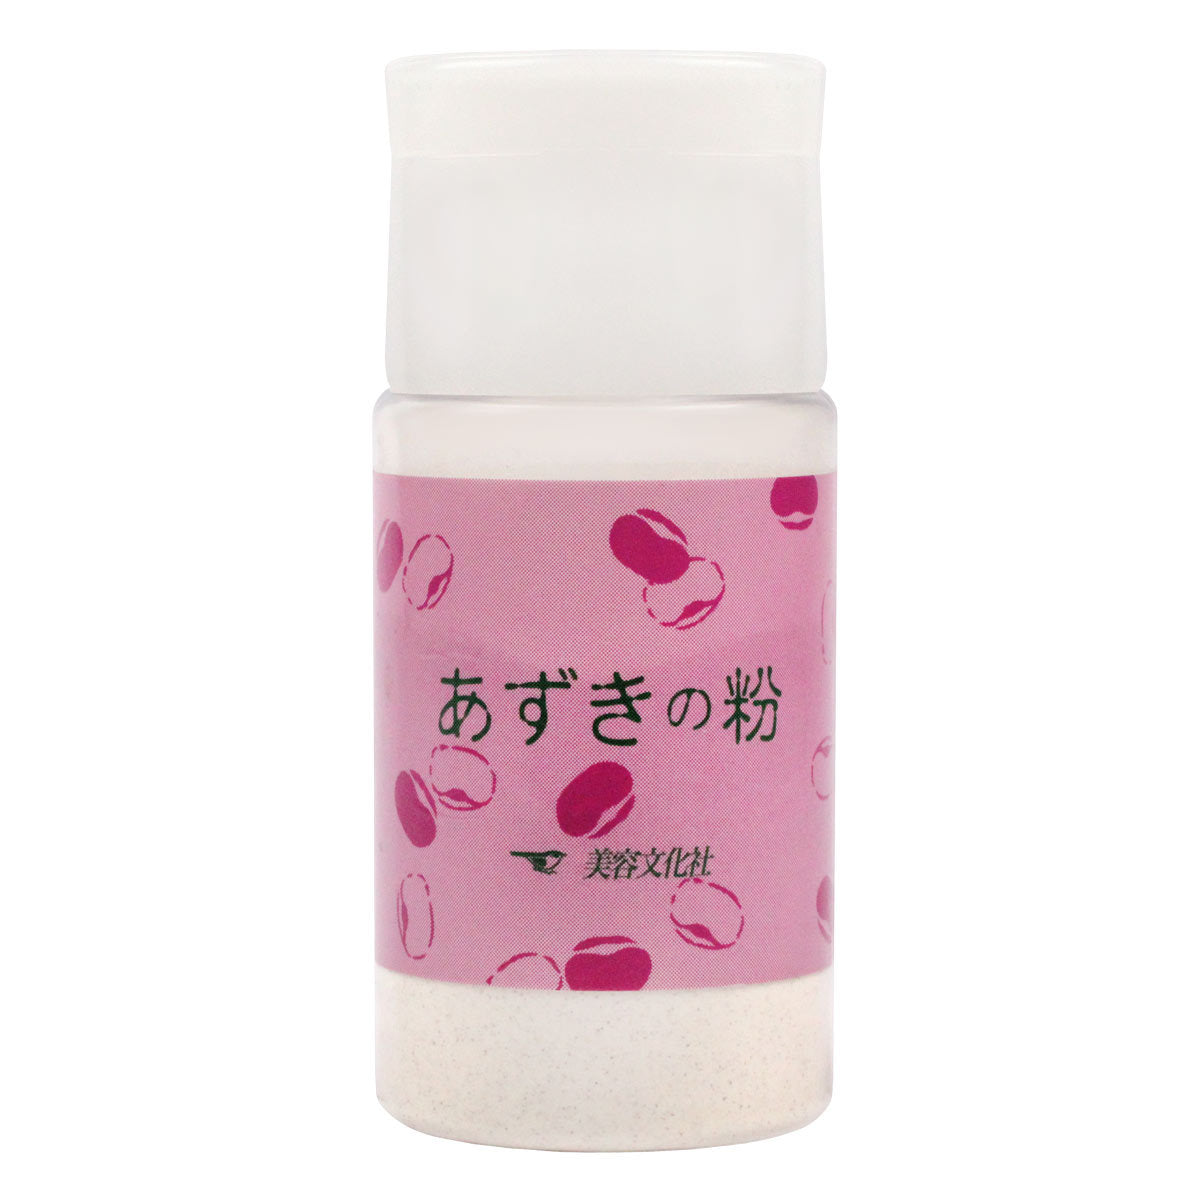 Primary image of Azuki Red Bean Powder Scrub